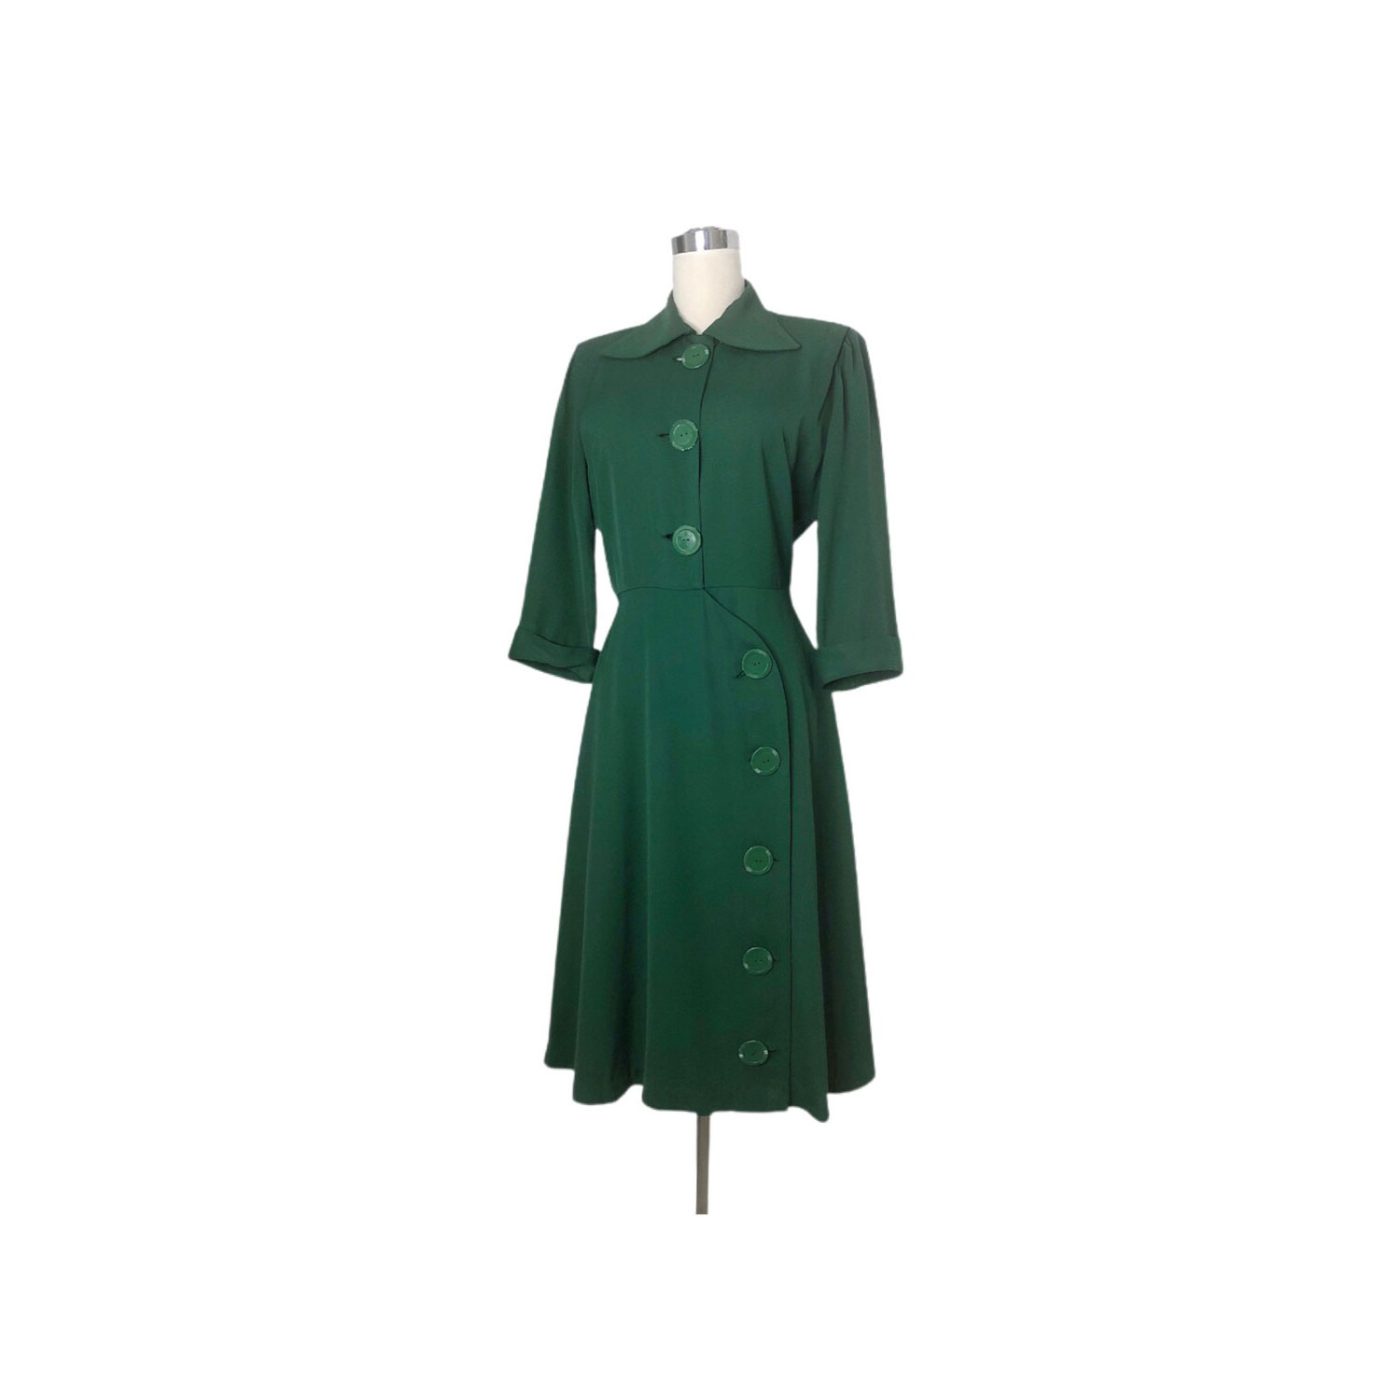 Dark green rayon 1940s dress